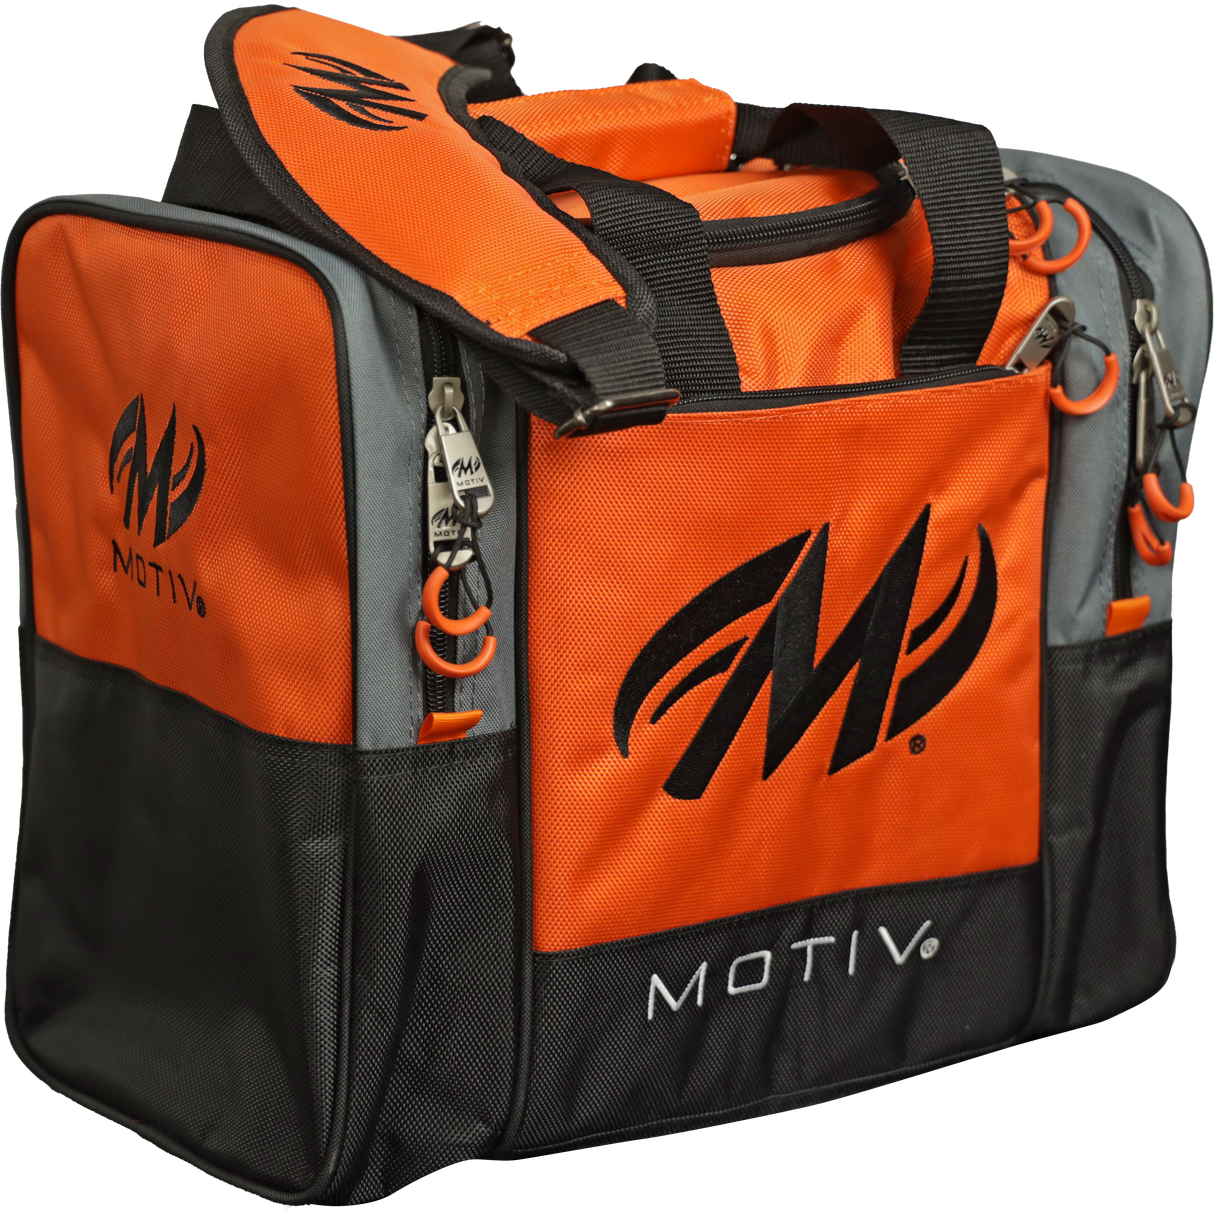 Motiv Shock 1 Ball Single Tote Tangerine Bowling Bag suitcase league tournament play sale discount coupon online pba tour